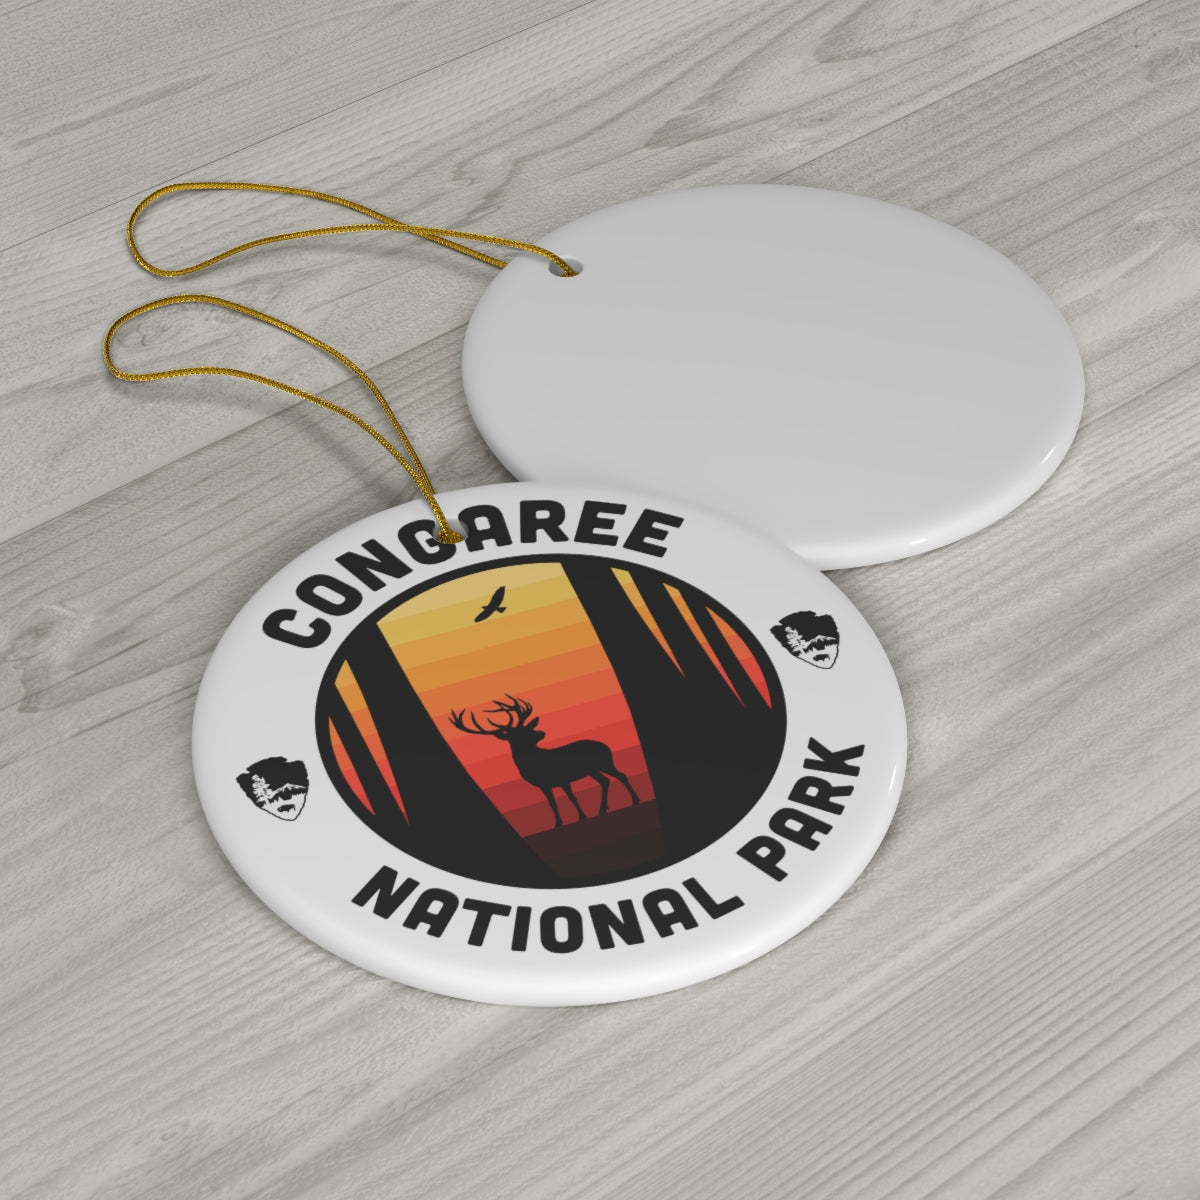 Congaree National Park Ornament - Round Emblem Design